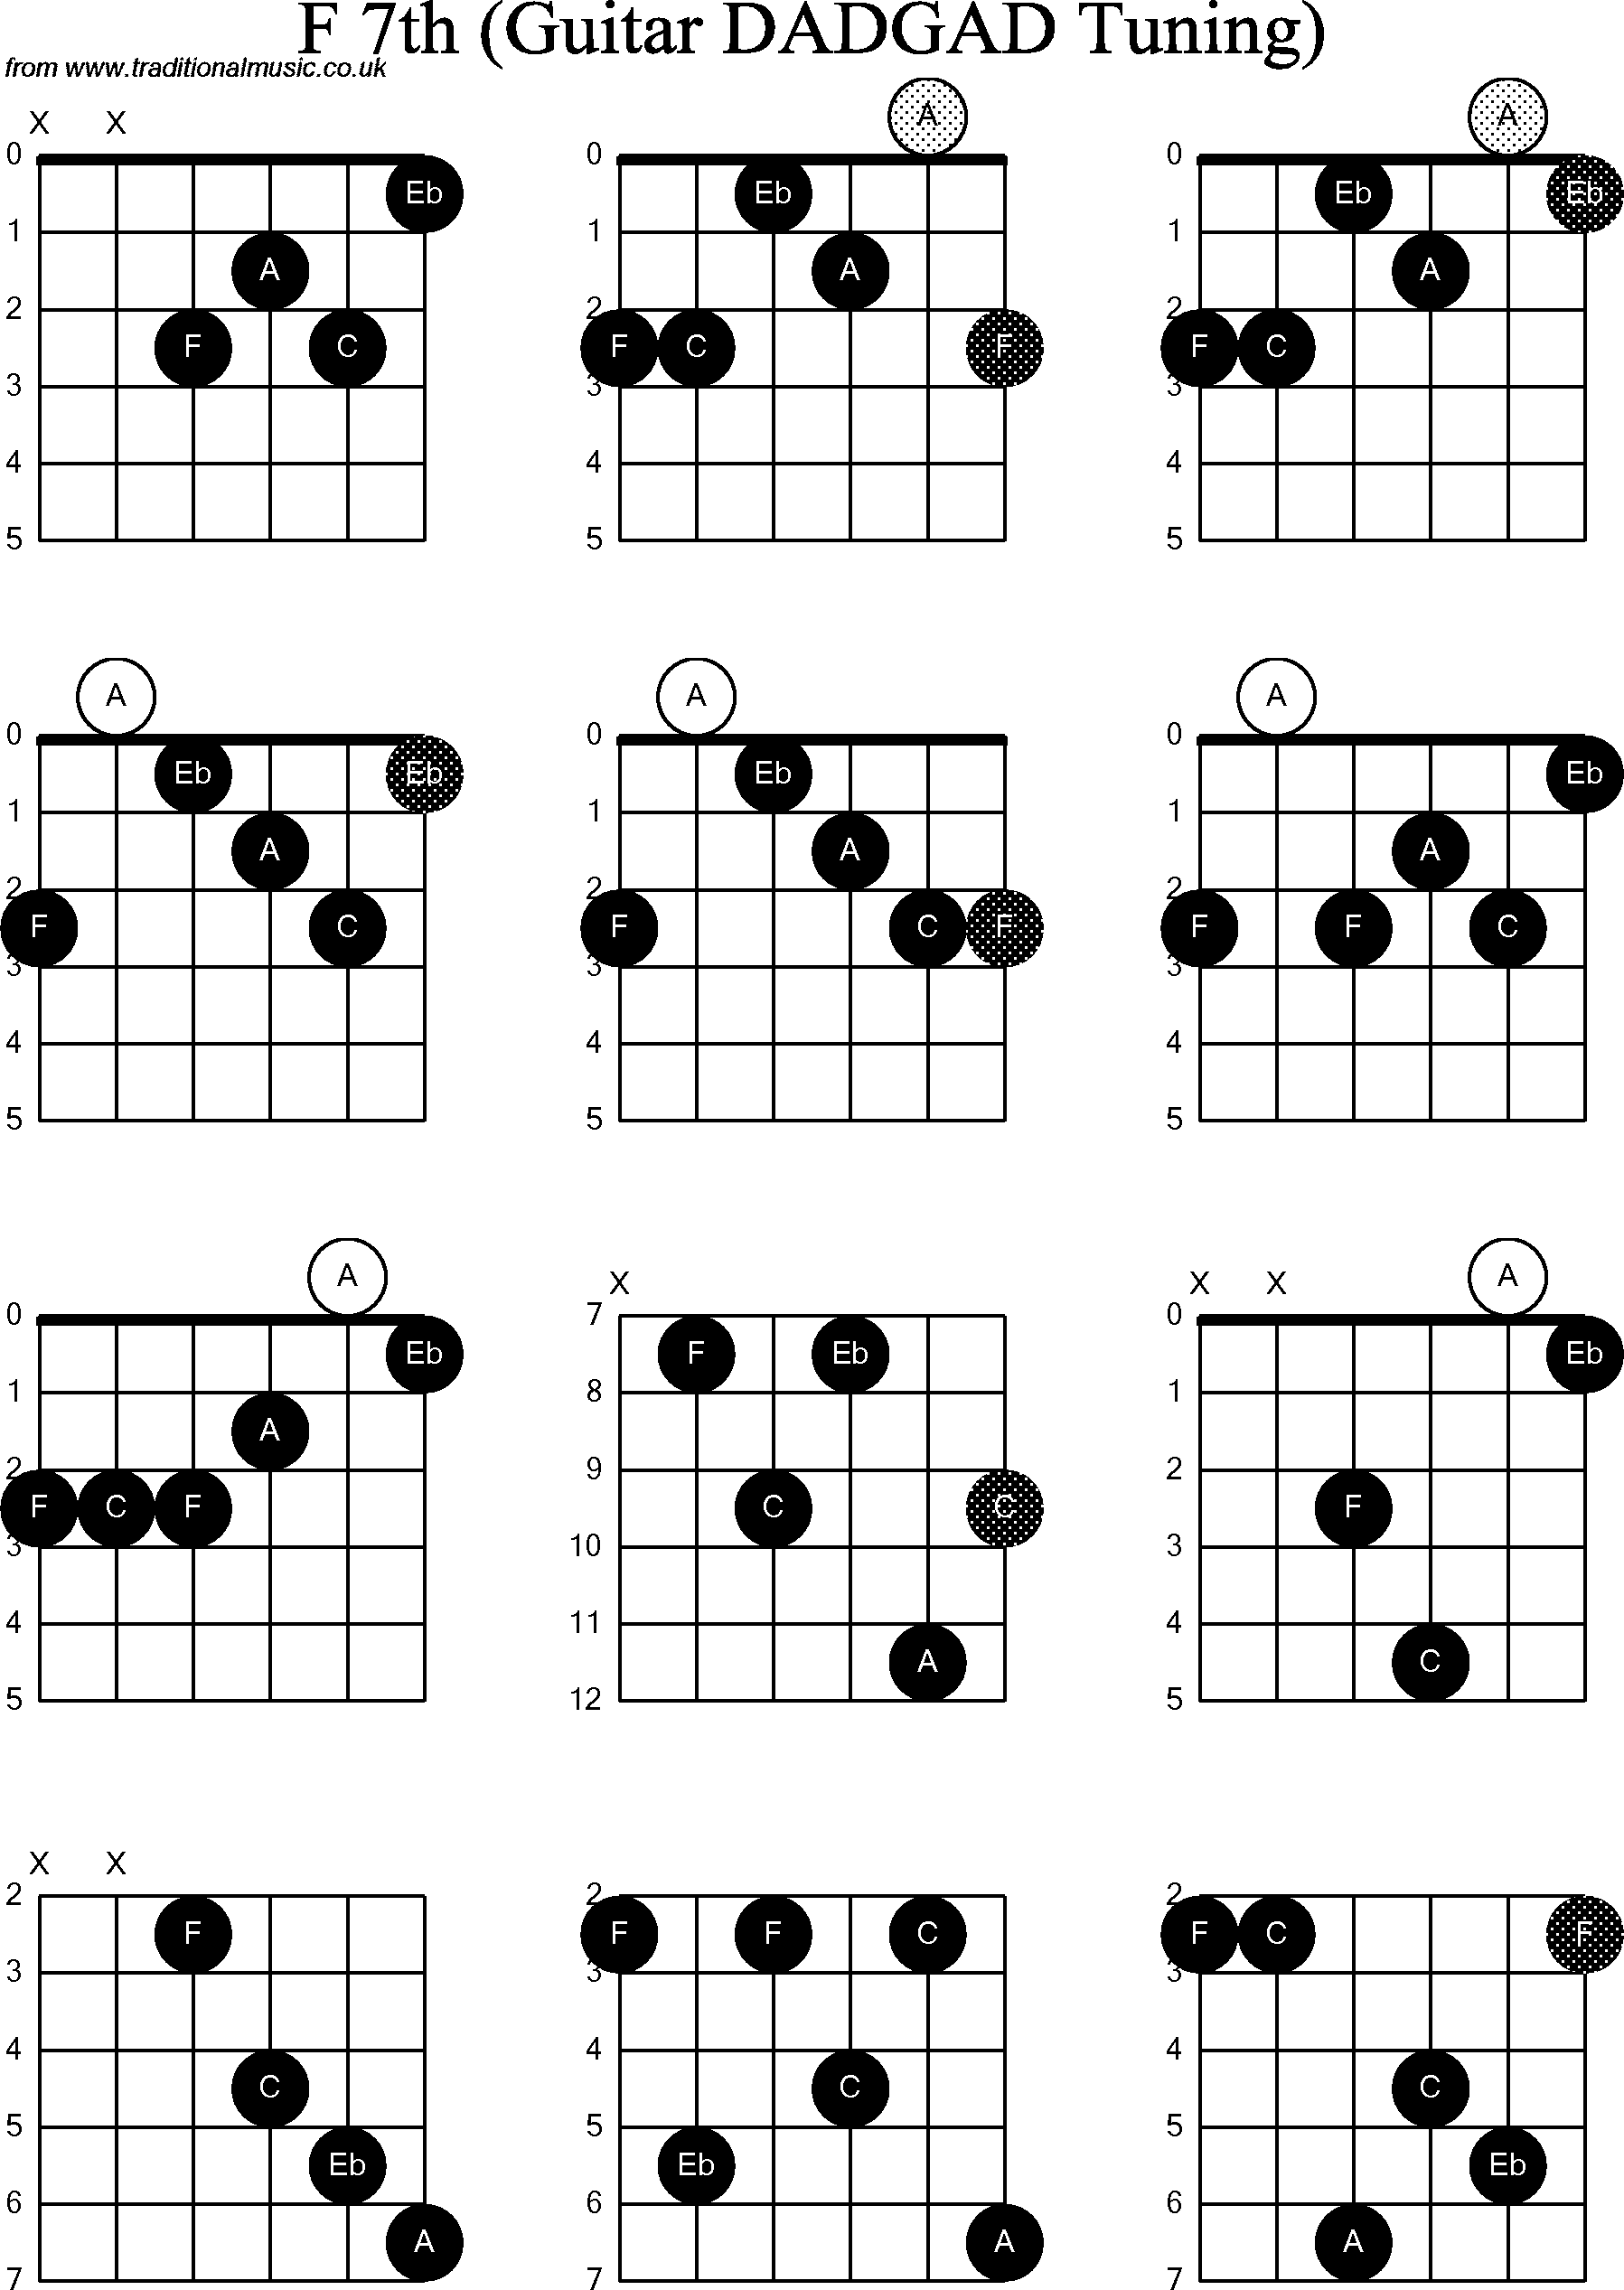 Chord Diagrams for D Modal Guitar(DADGAD), F7th